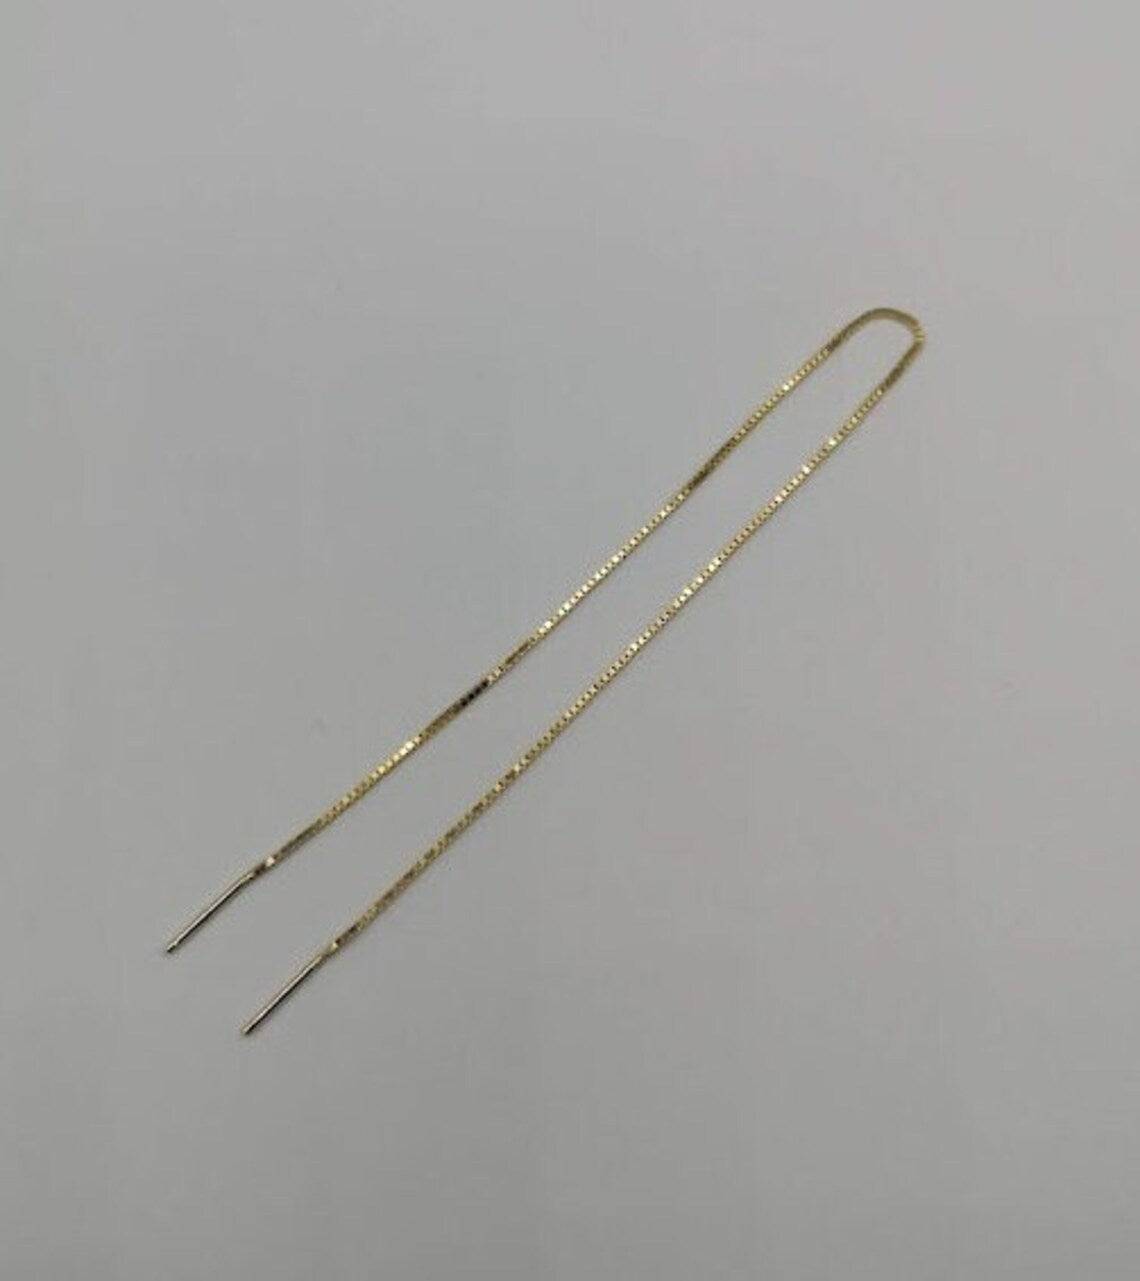 Mono threader earring in 10K yellow gold